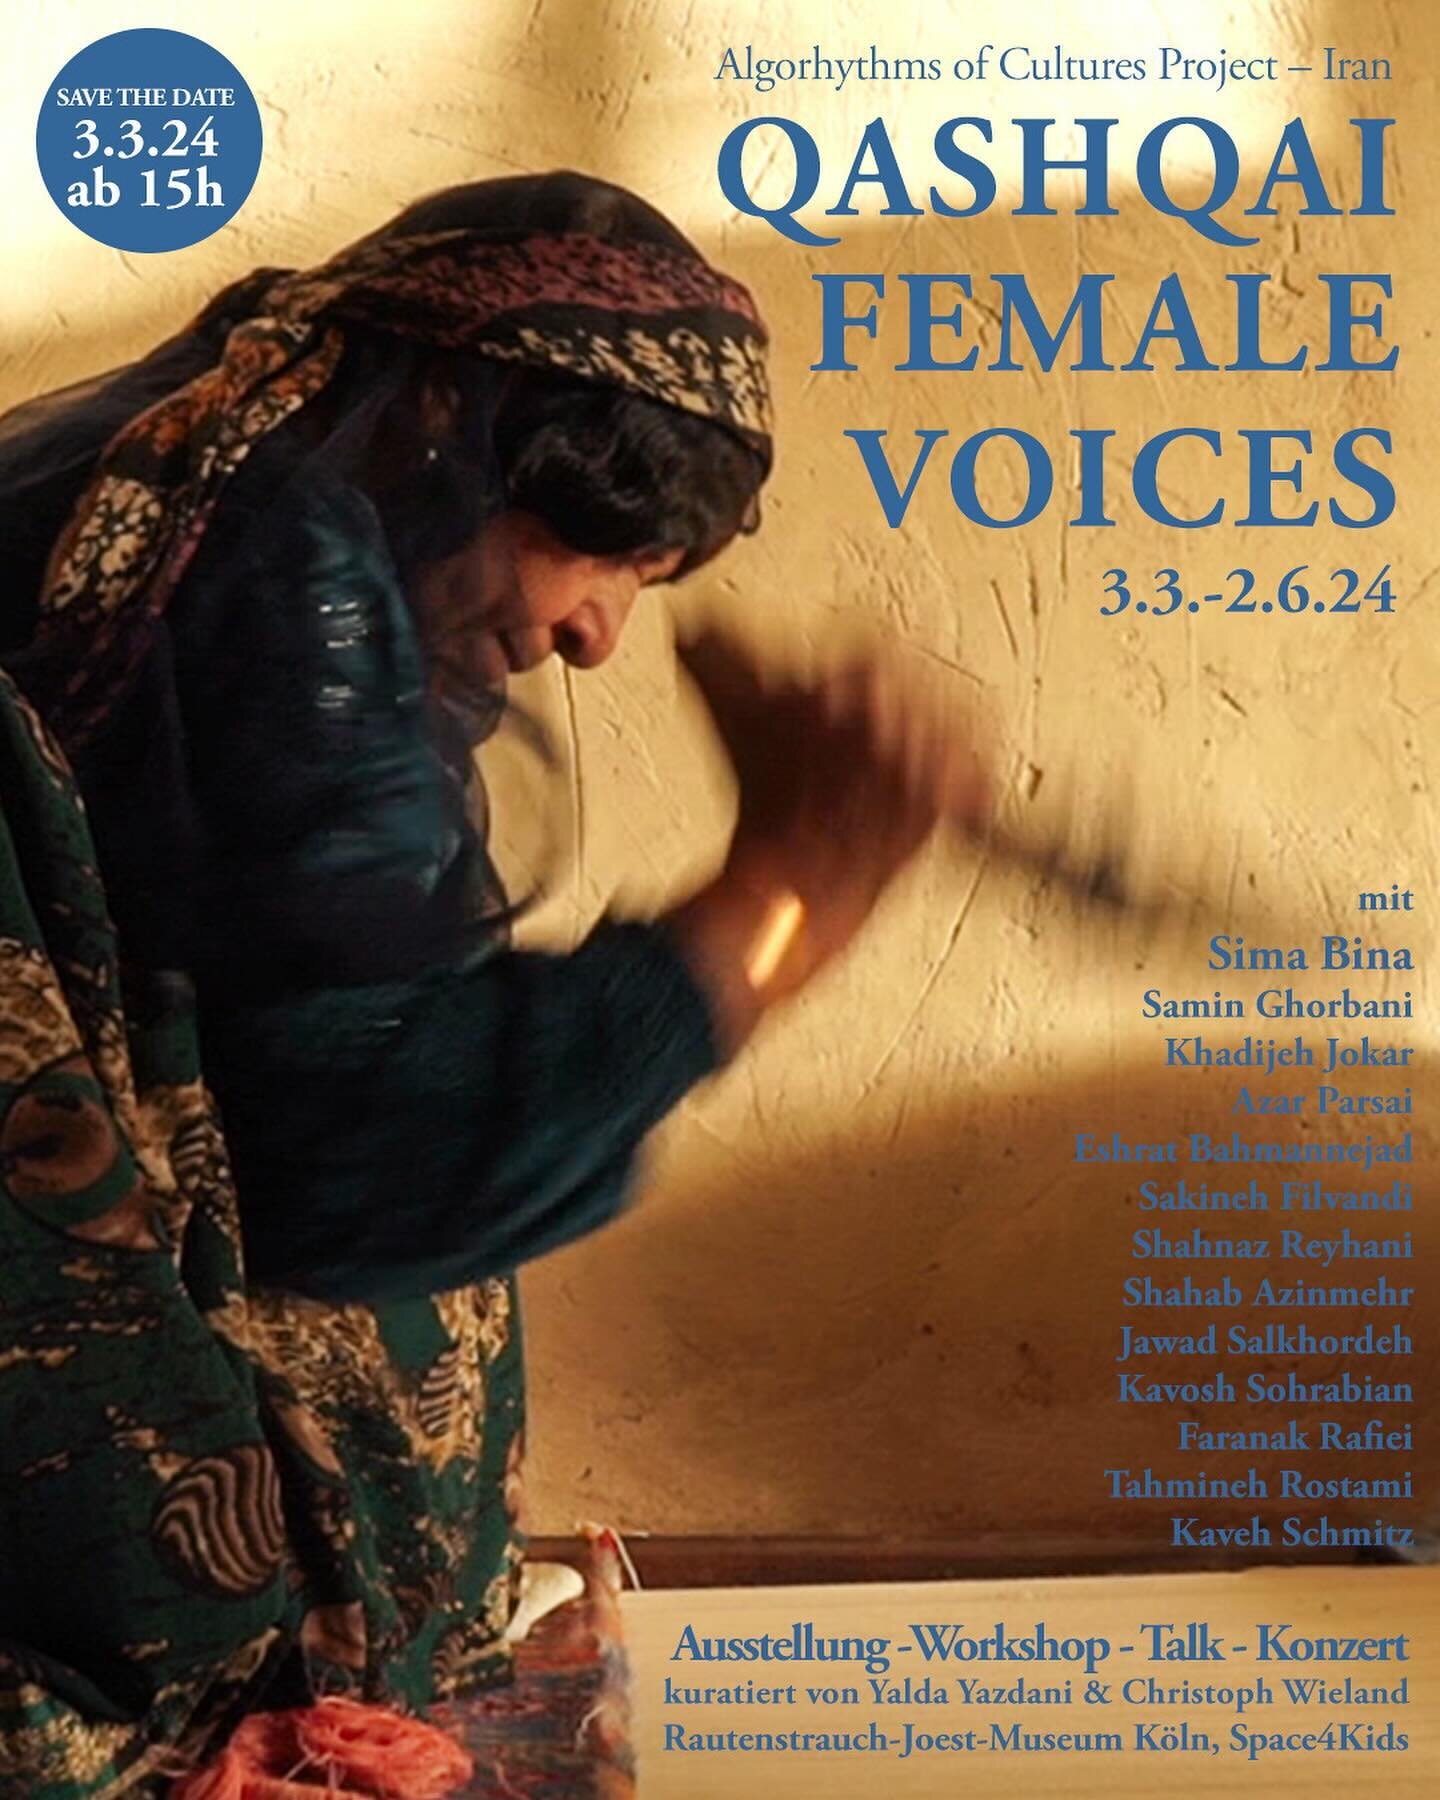 SAVE THE DATE!
3.3.24, 15-20h
@rjmkoeln 
 
Qashqai Female Voices &ndash; Algorhythms of Cultures &ndash; Iran
kuratiert von @yalda.yazdani &amp; @chris.wie.land 
 
mit
@simaoinaofficial 
@samin_ghorbanii 
Khadijeh Jokar
Azar Parsai
Eshrat Bahmannejad